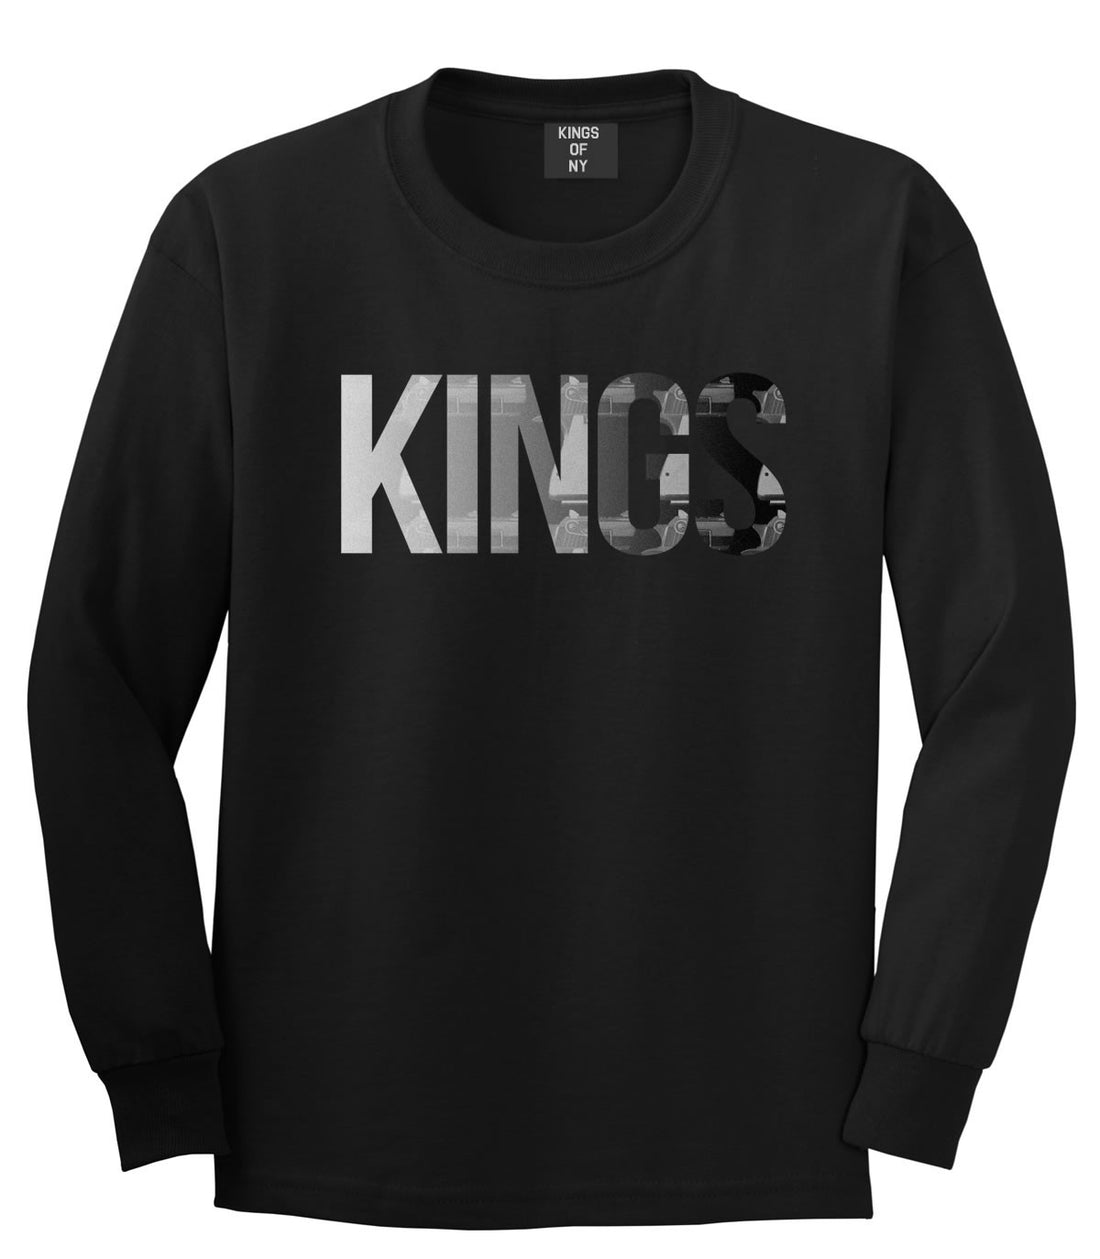 KINGS Gun Pattern Print Boys Kids Long Sleeve T-Shirt in Black by Kings Of NY